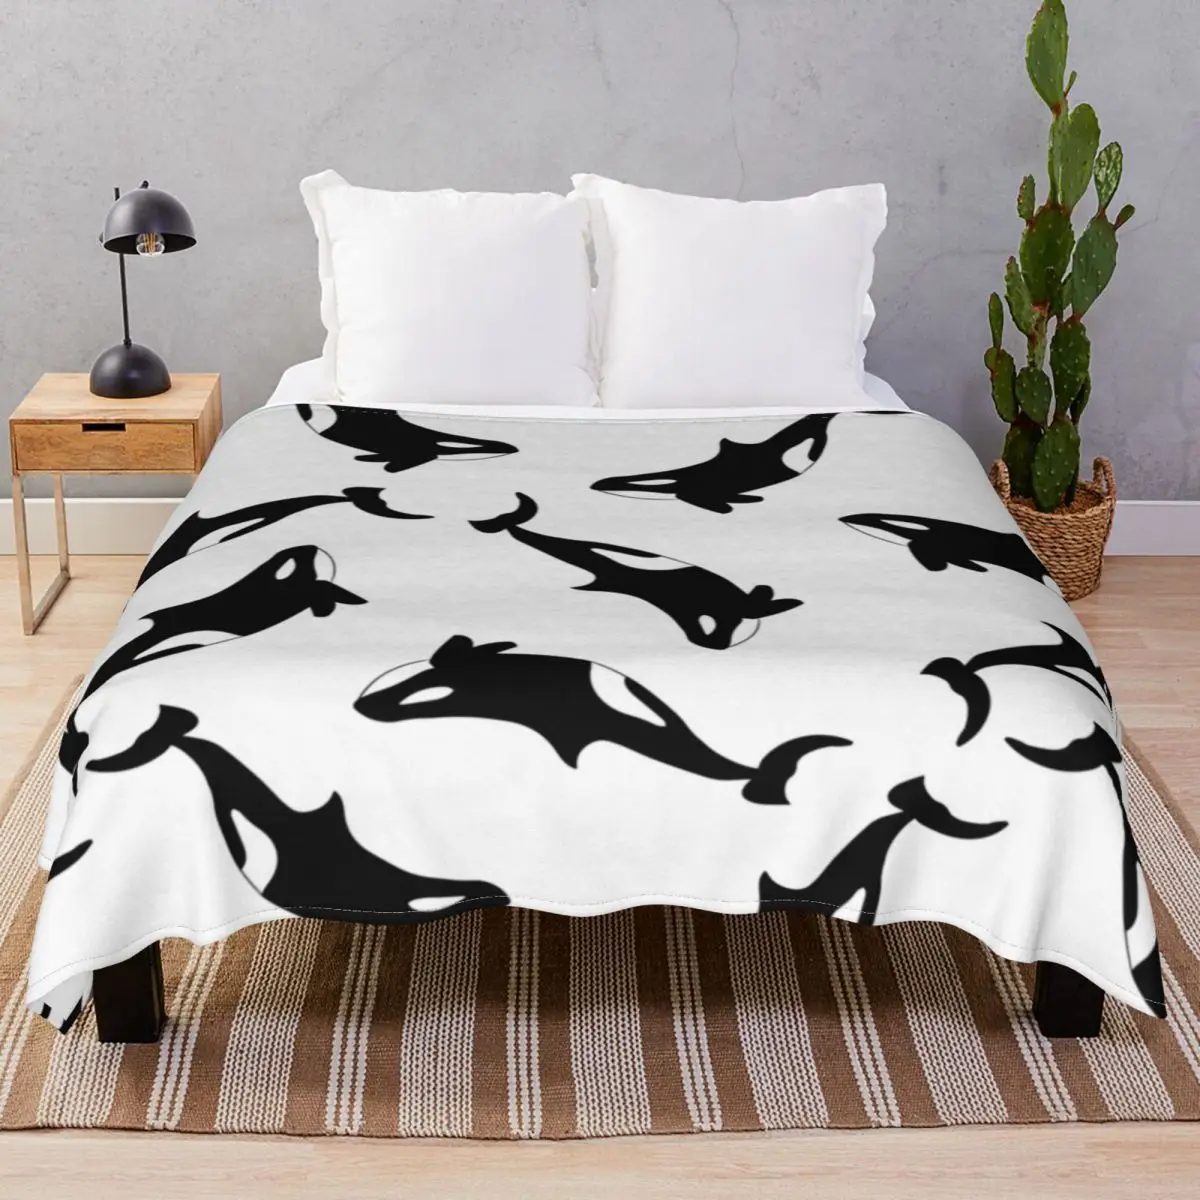 Orca Killer Whale Blankets Fleece Winter Comfortable Throw Blanket for Bedding Sofa Camp Office